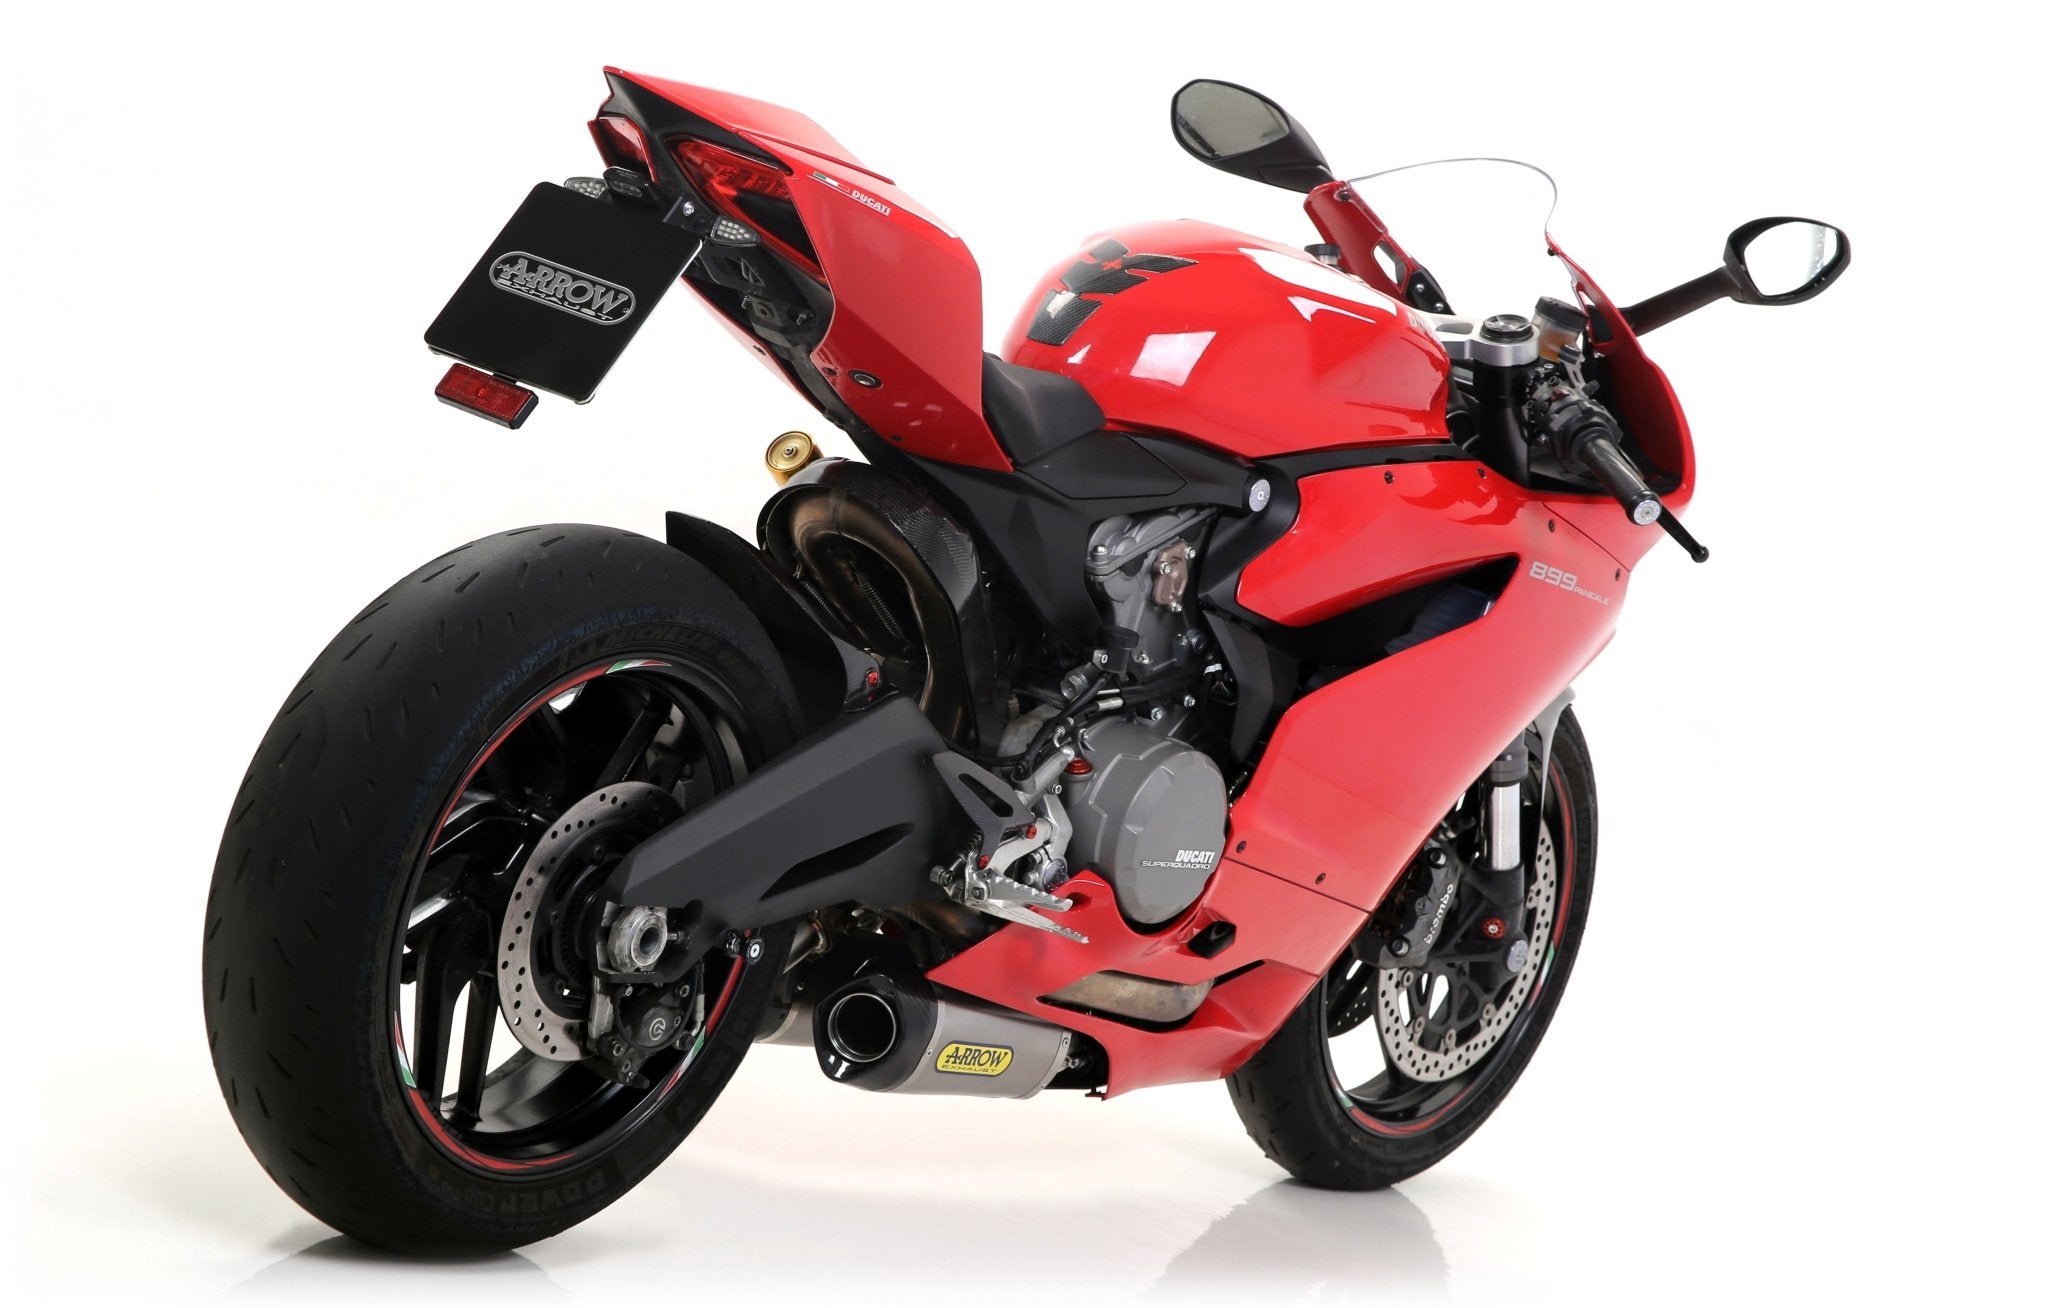 Ducati 899 Panigale 2014/2015 - LRL Motors